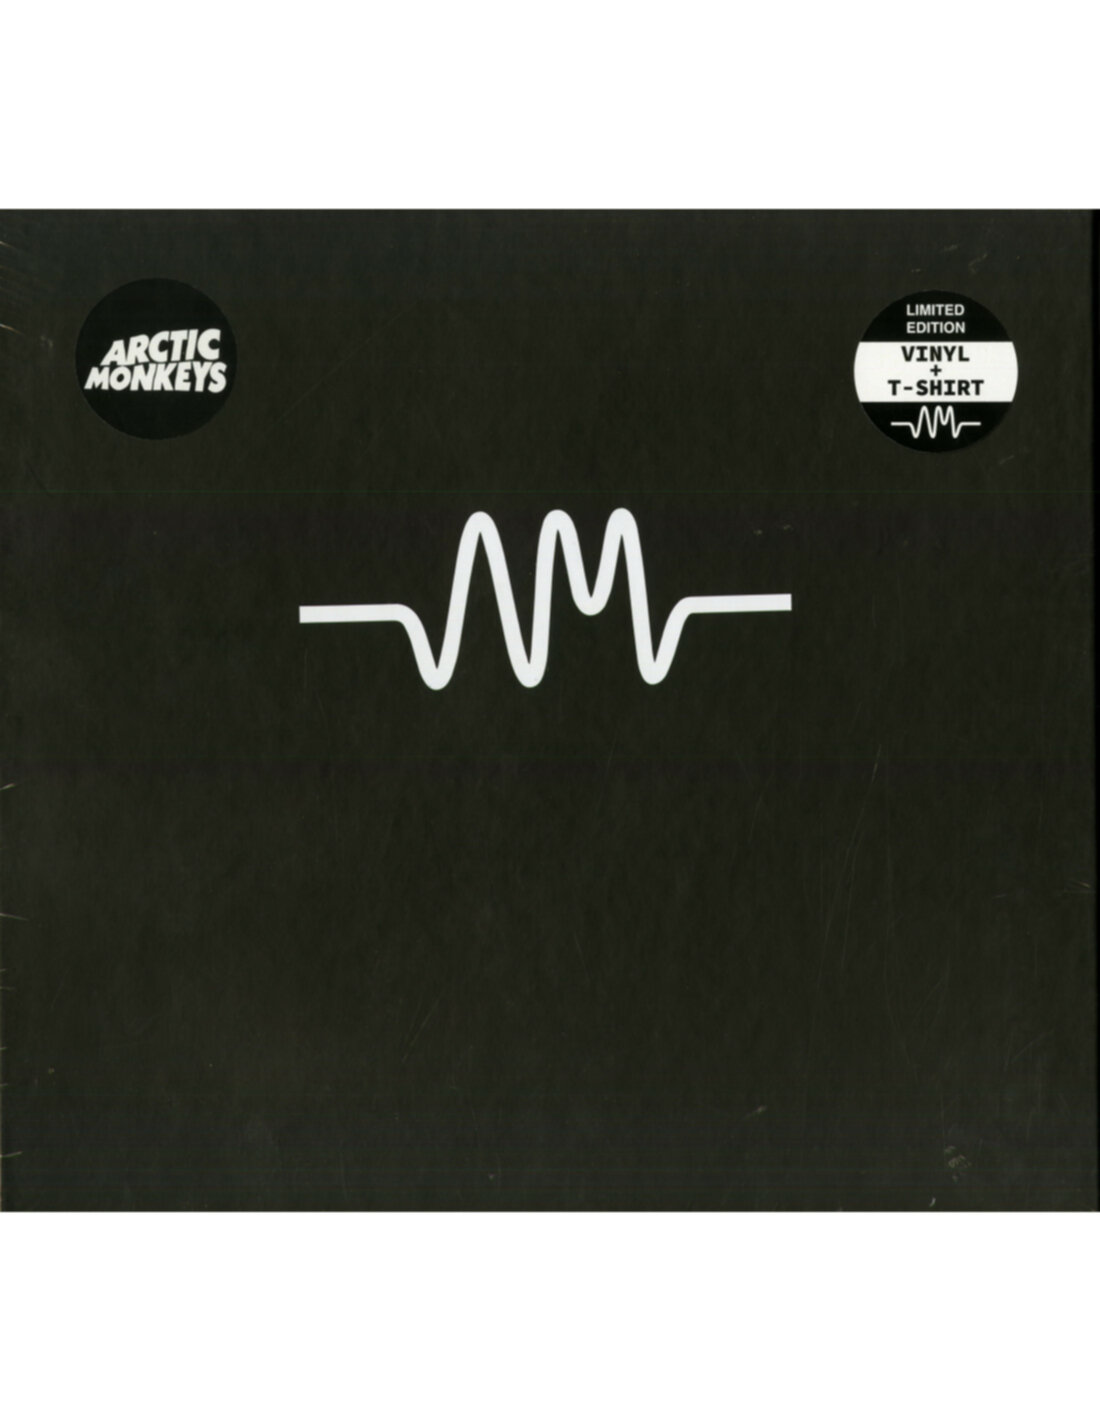 Arctic Monkey - Am (Vinyl + T-Shirt) Limited Edition